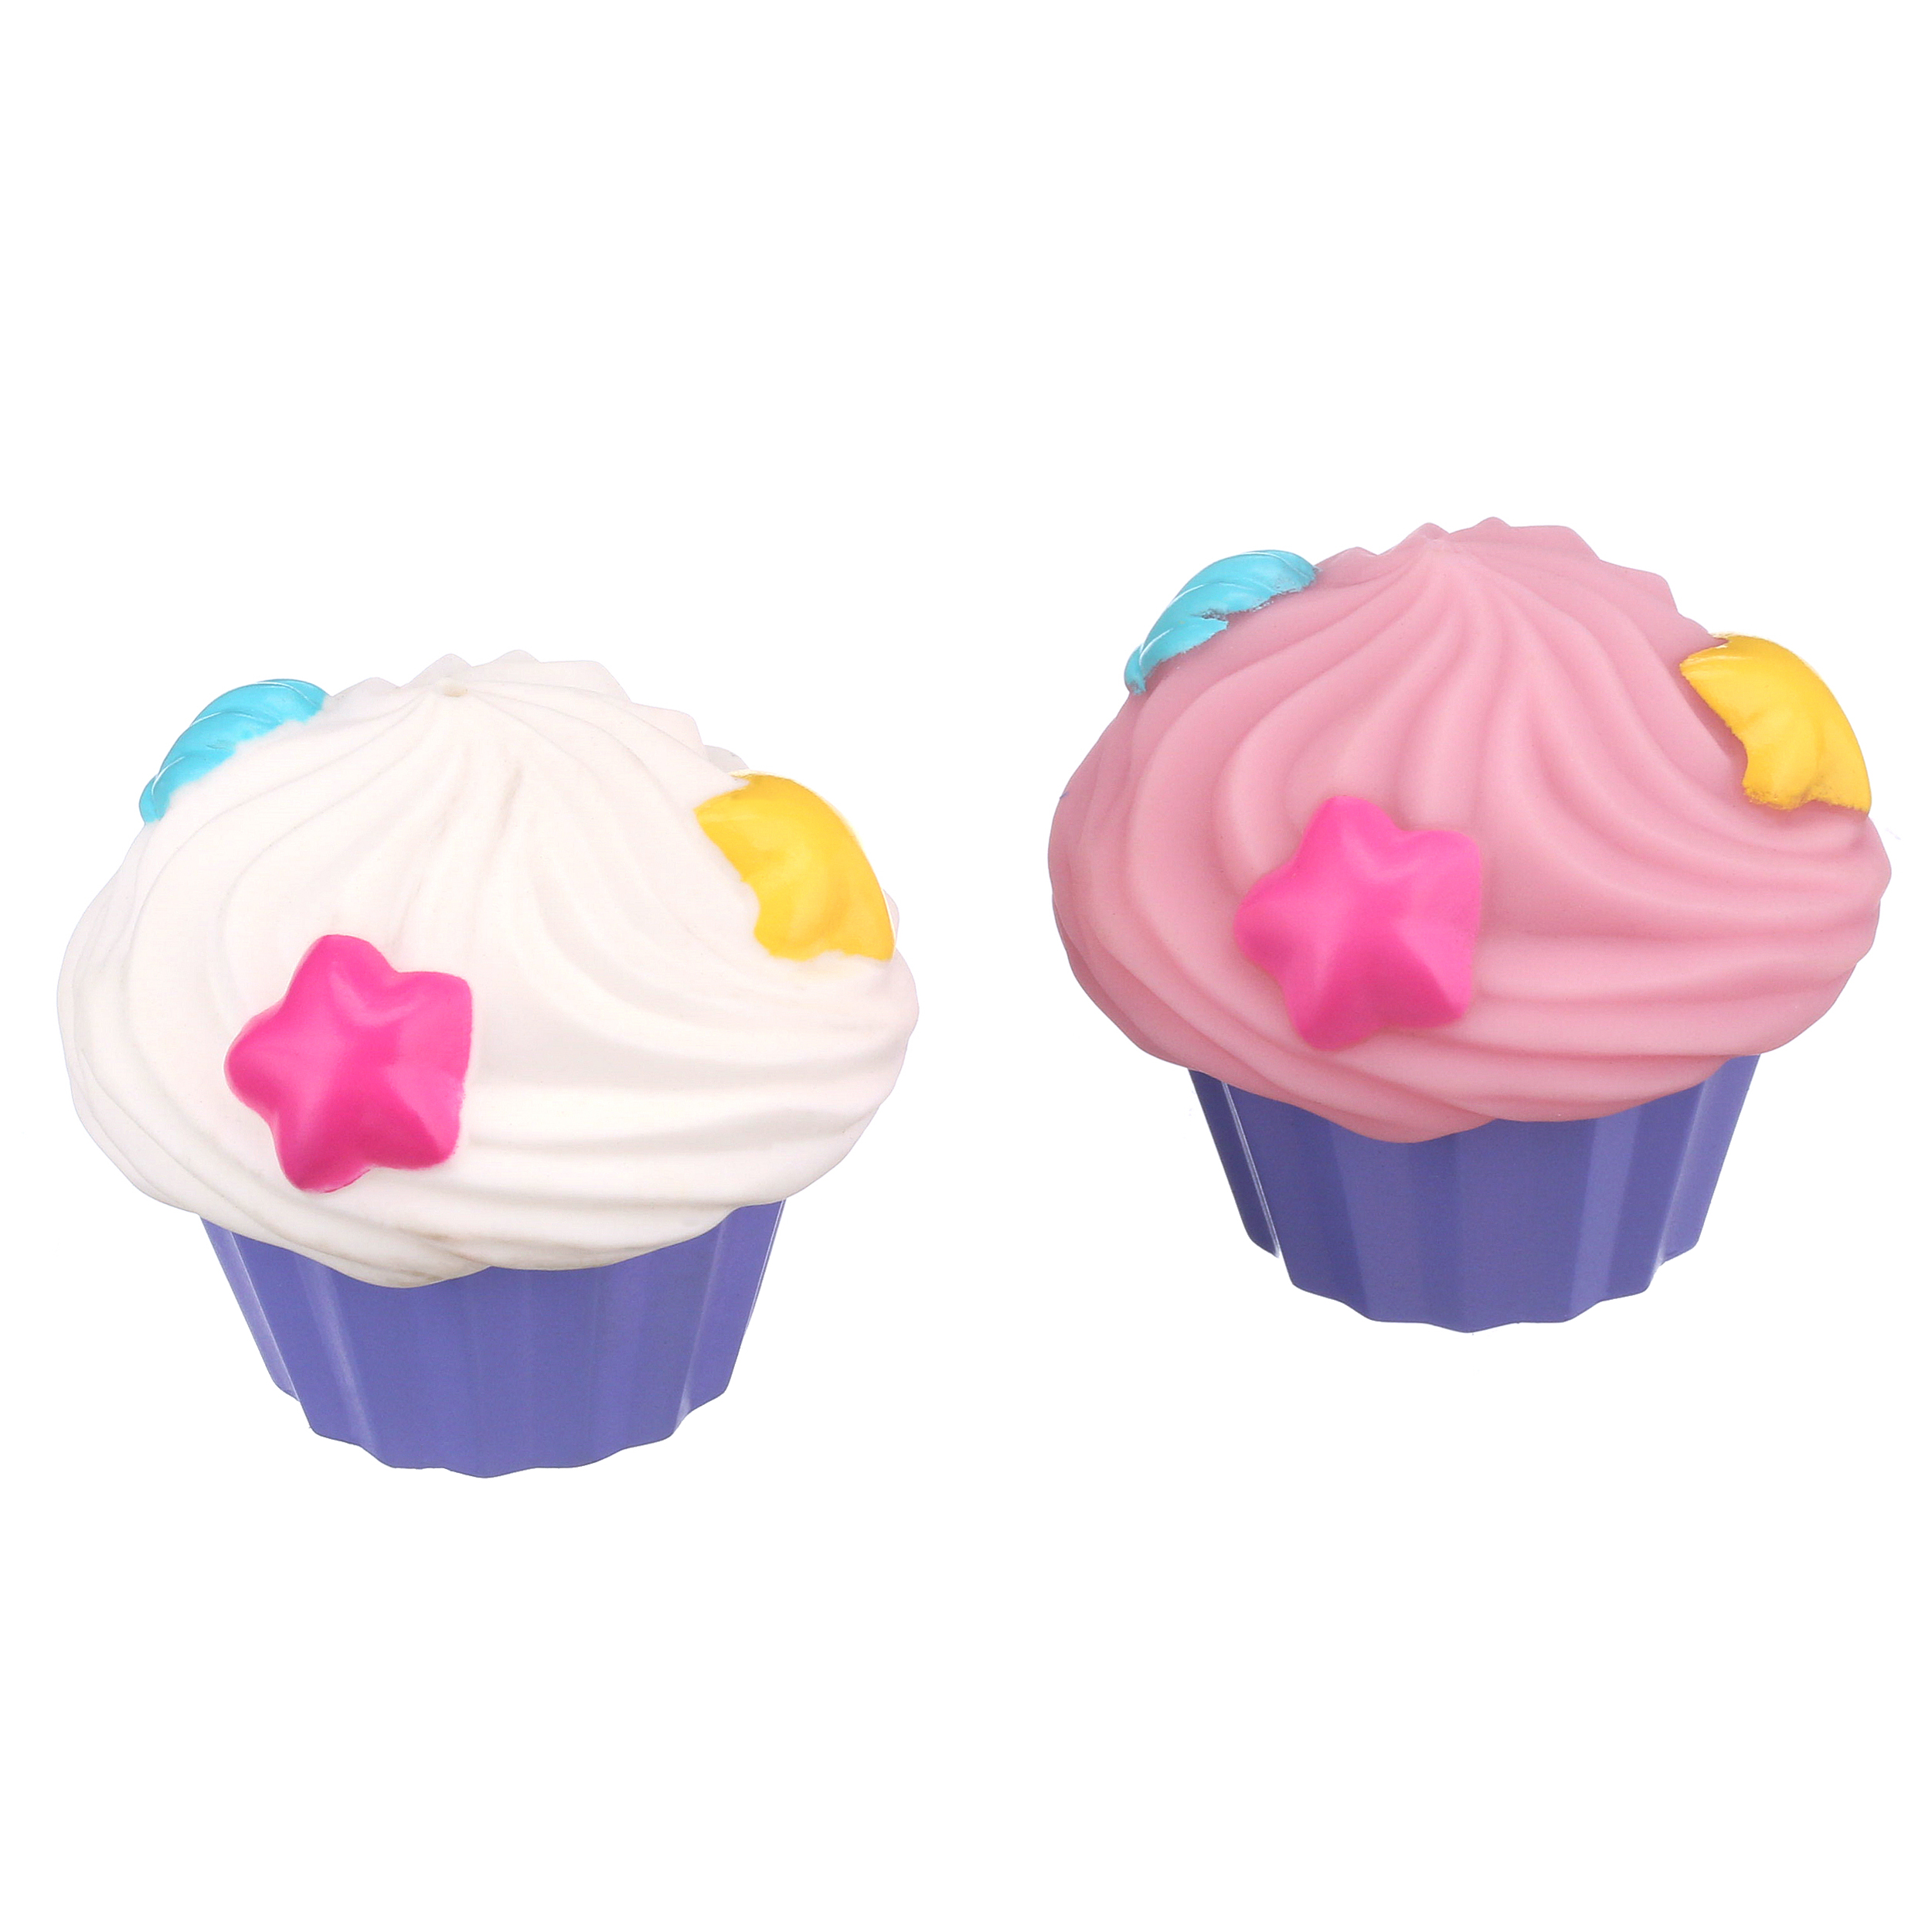 Munchkin® Toddler Bath Tea and Cupcake Set, Pink, 5 Piece Set, Unisex - image 4 of 6